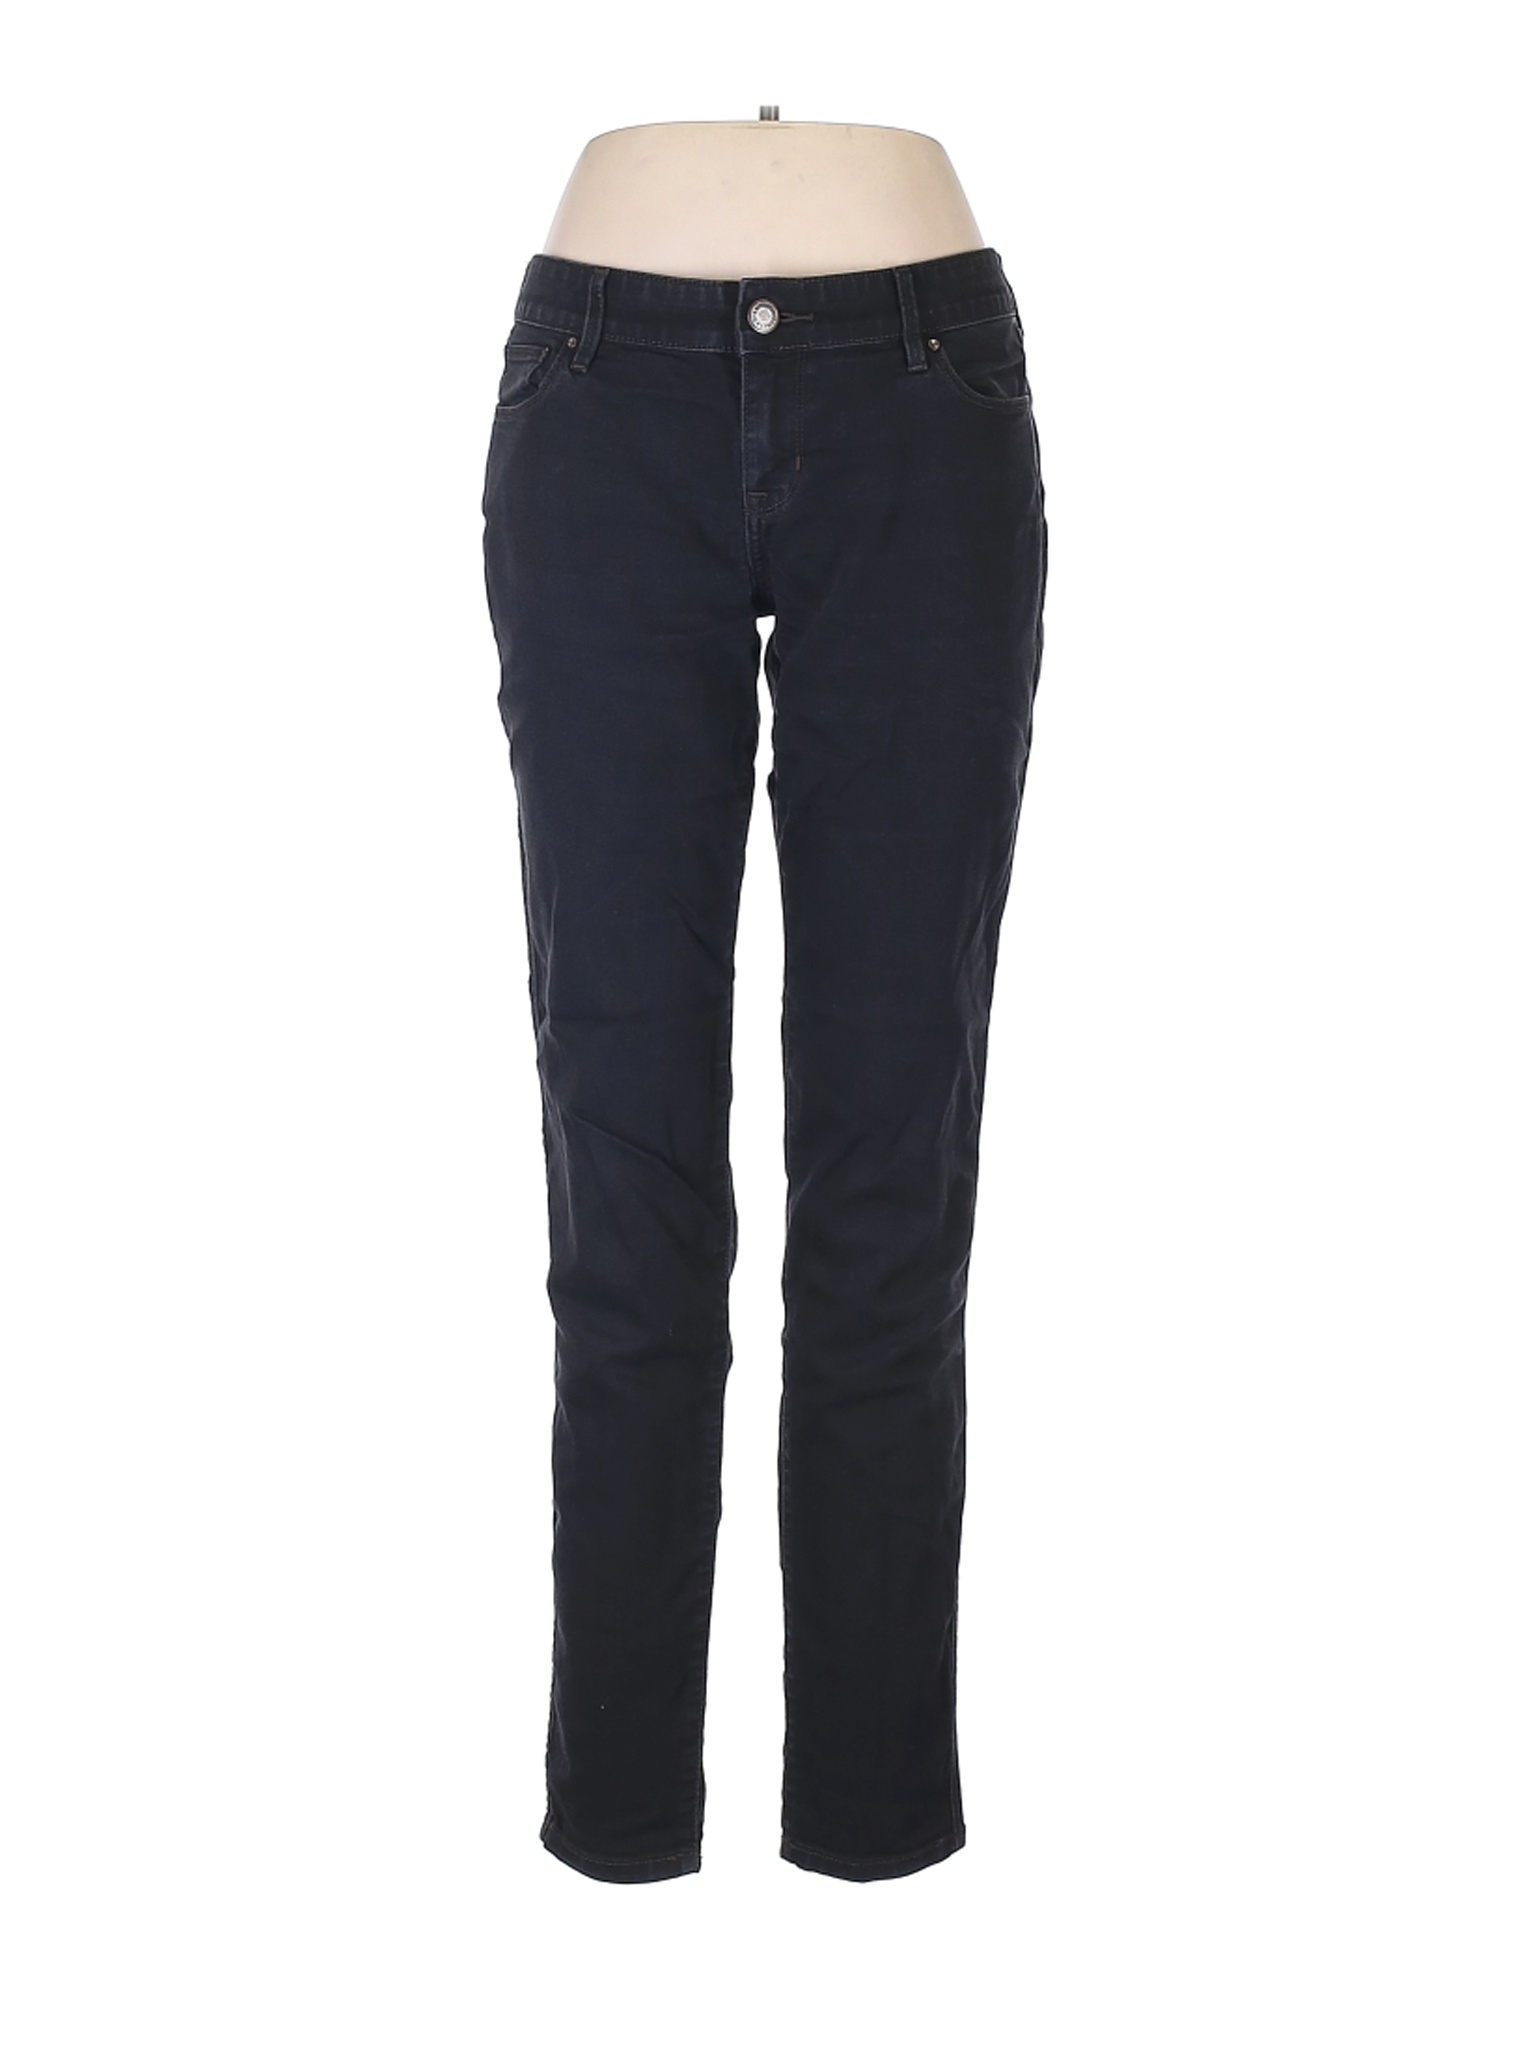 The Limited Women Black Jeans 10 | eBay